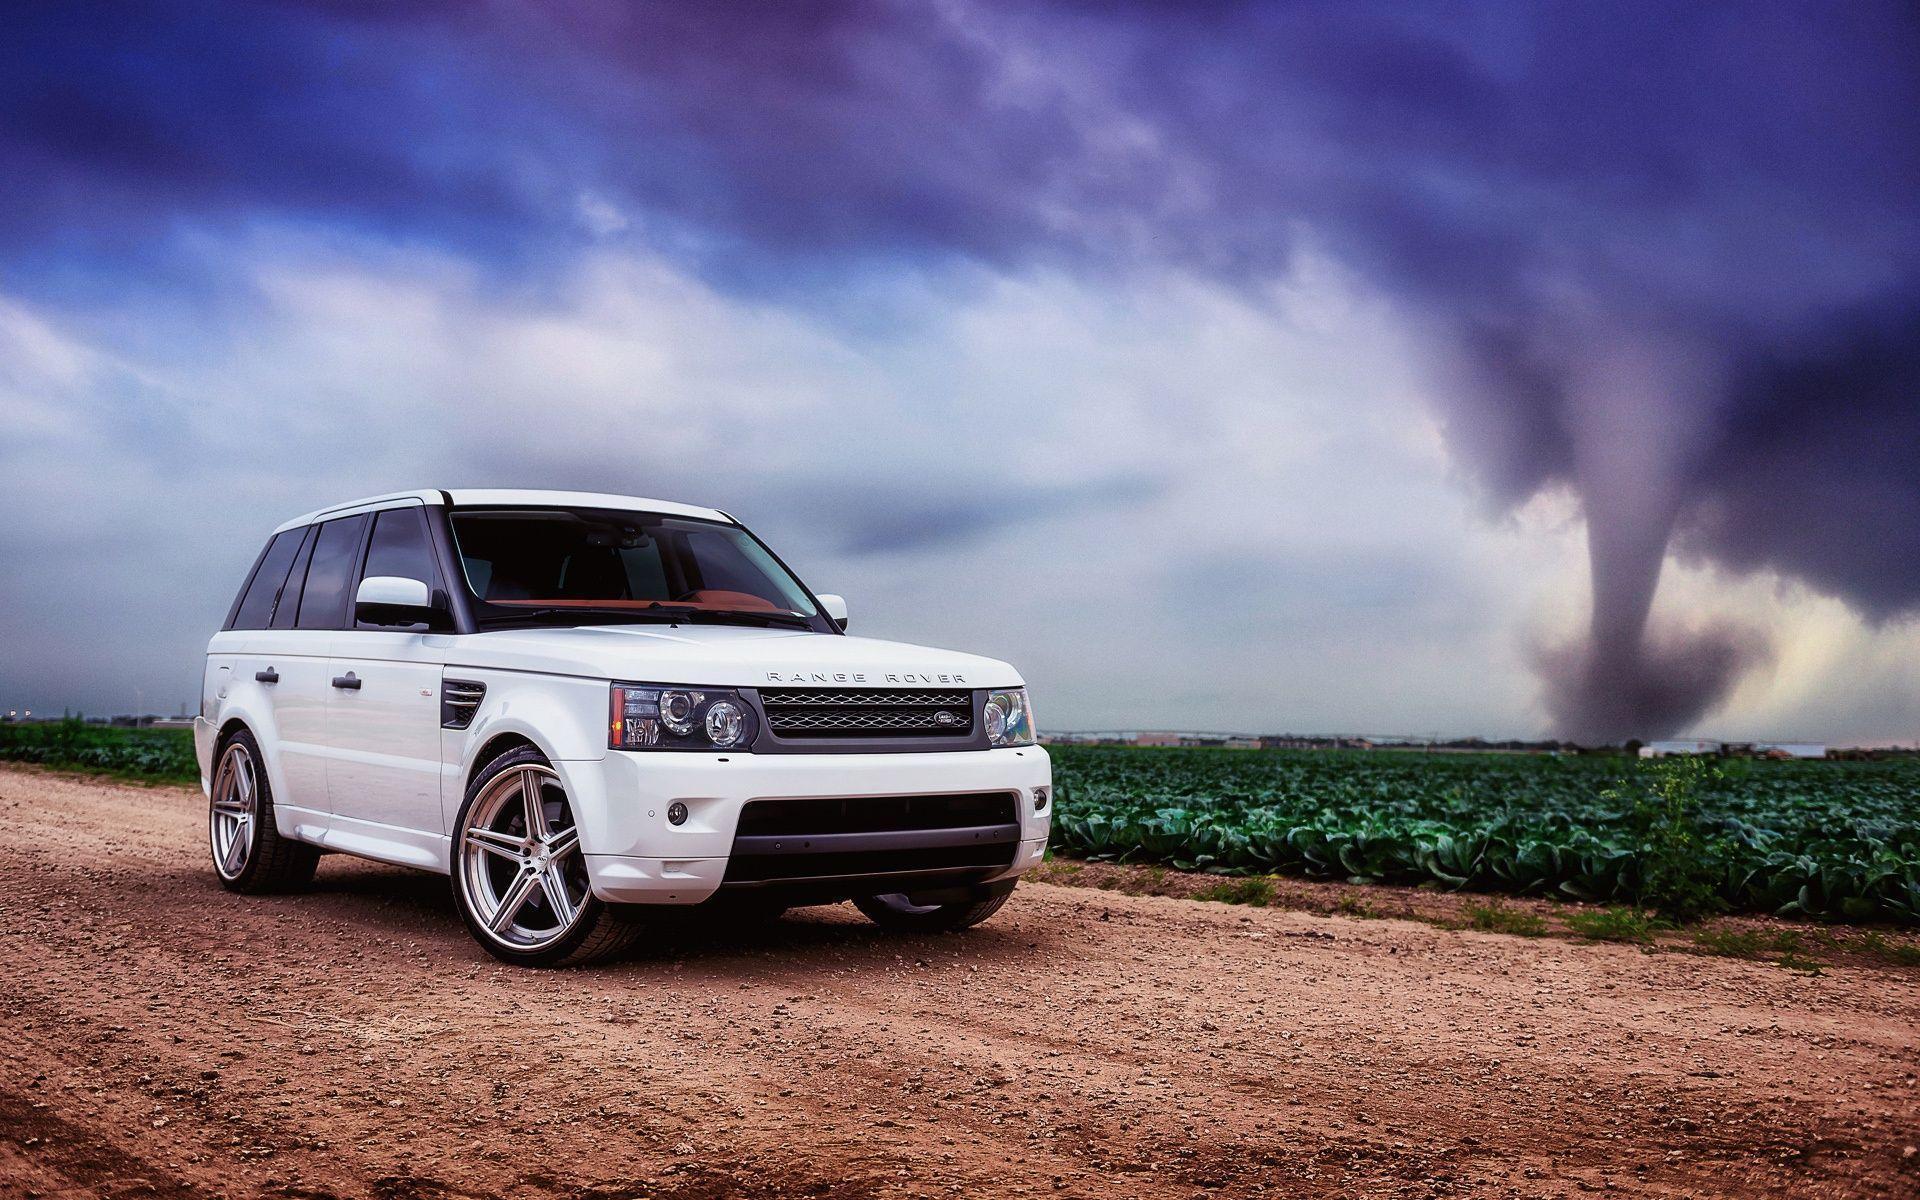 HD Range Rover Wallpaper & Range Rover Background Image For Download